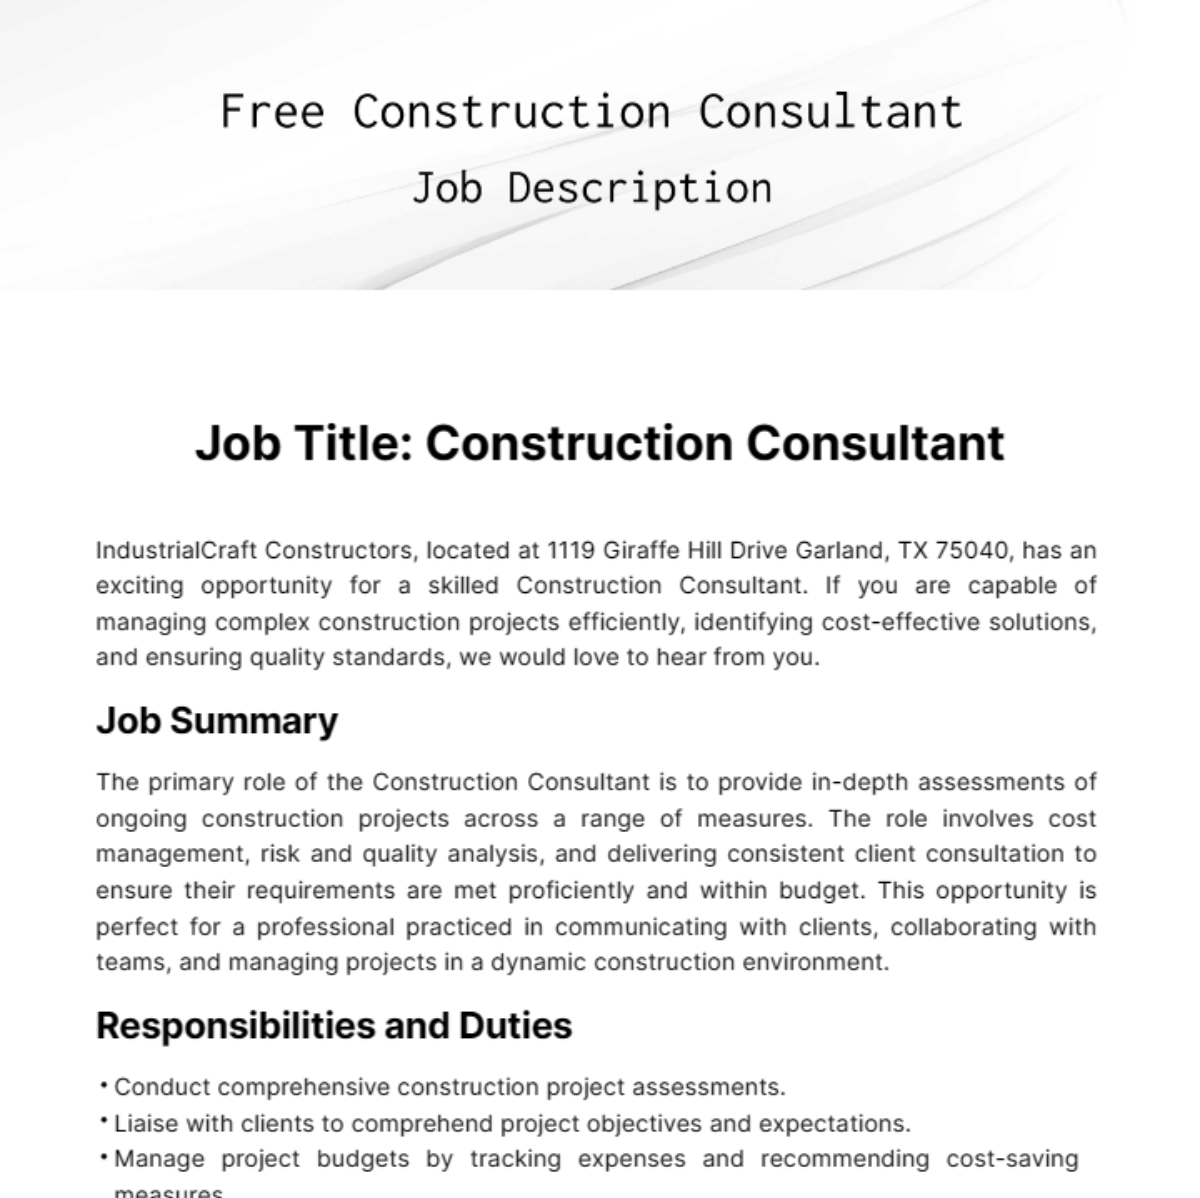 Free Construction Consultant Job Description Template